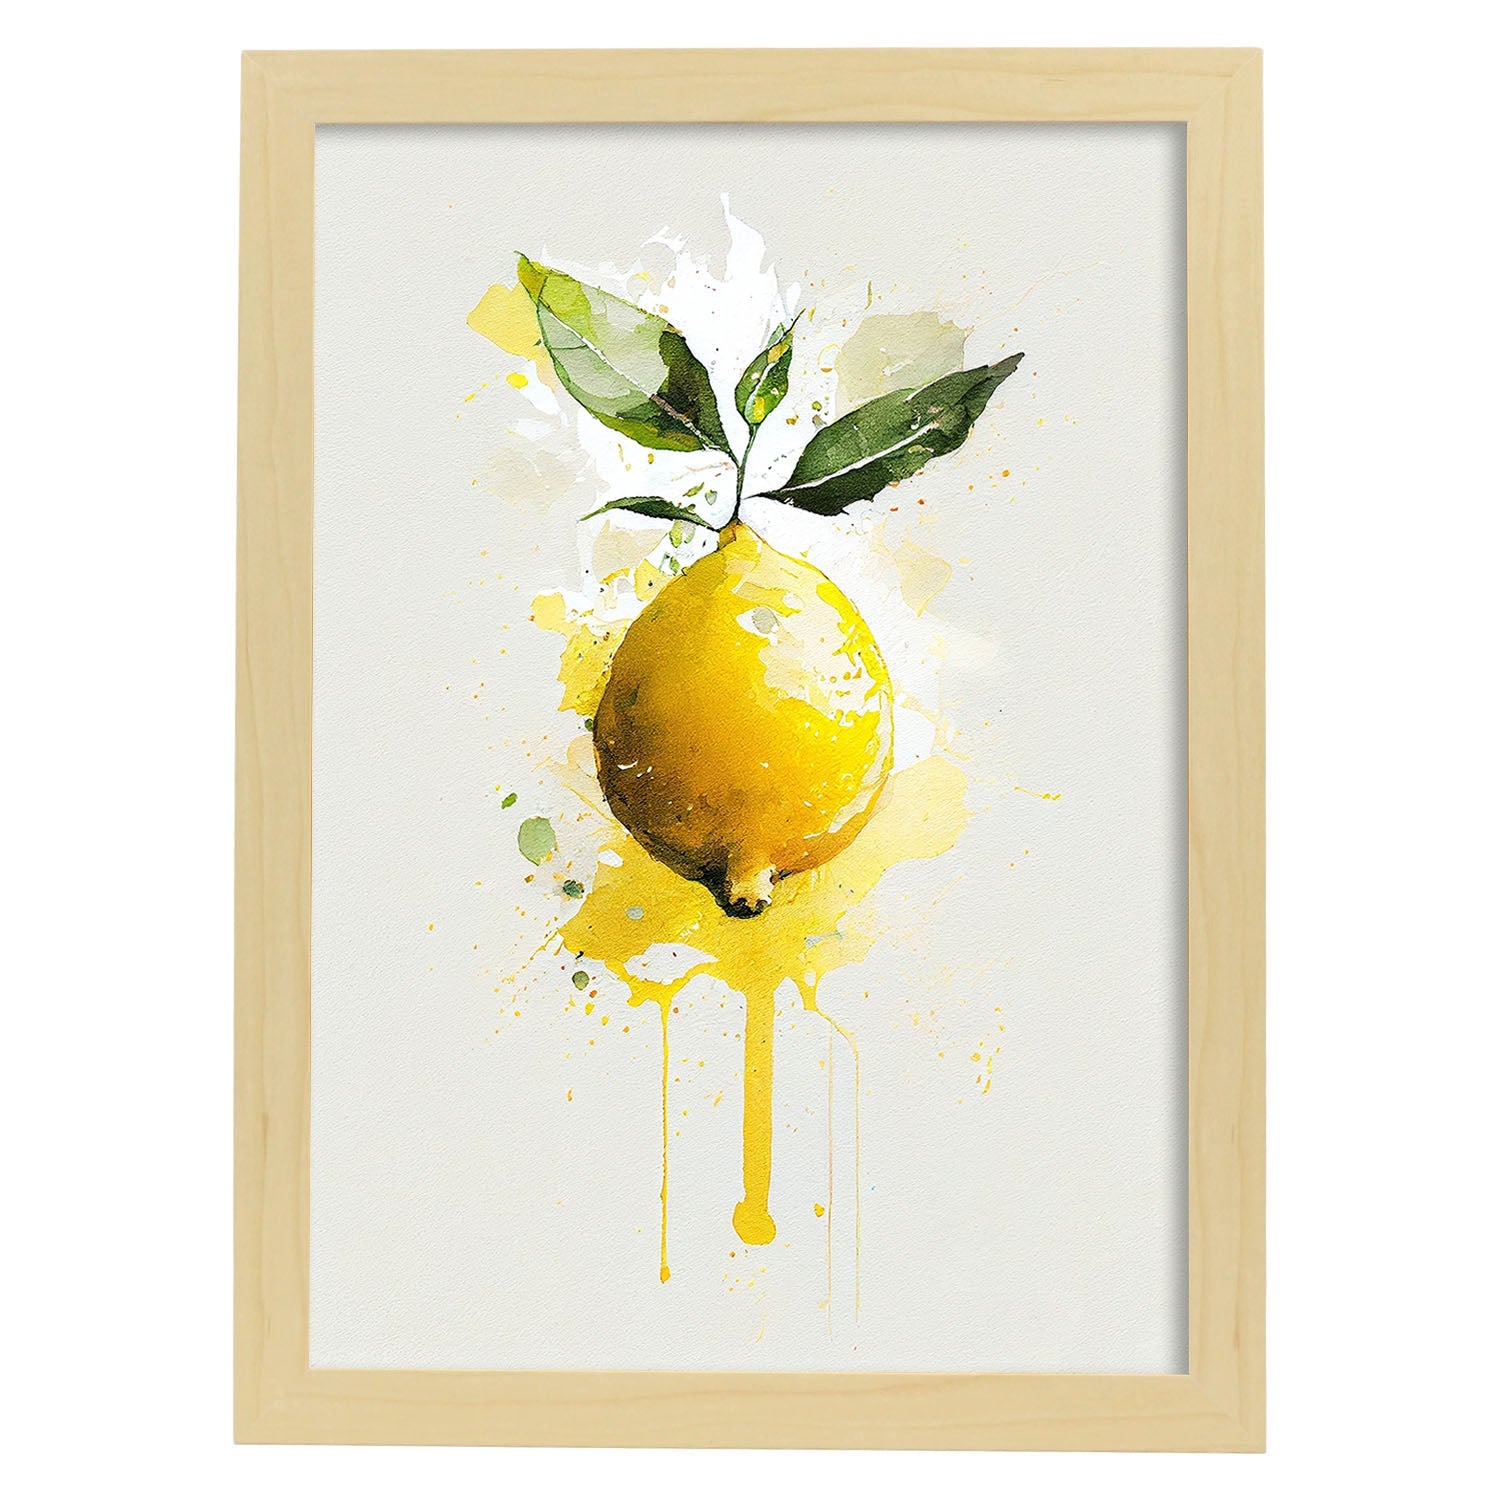 Nacnic minimalist Lemon. Aesthetic Wall Art Prints for Bedroom or Living Room Design.-Artwork-Nacnic-A4-Marco Madera Clara-Nacnic Estudio SL